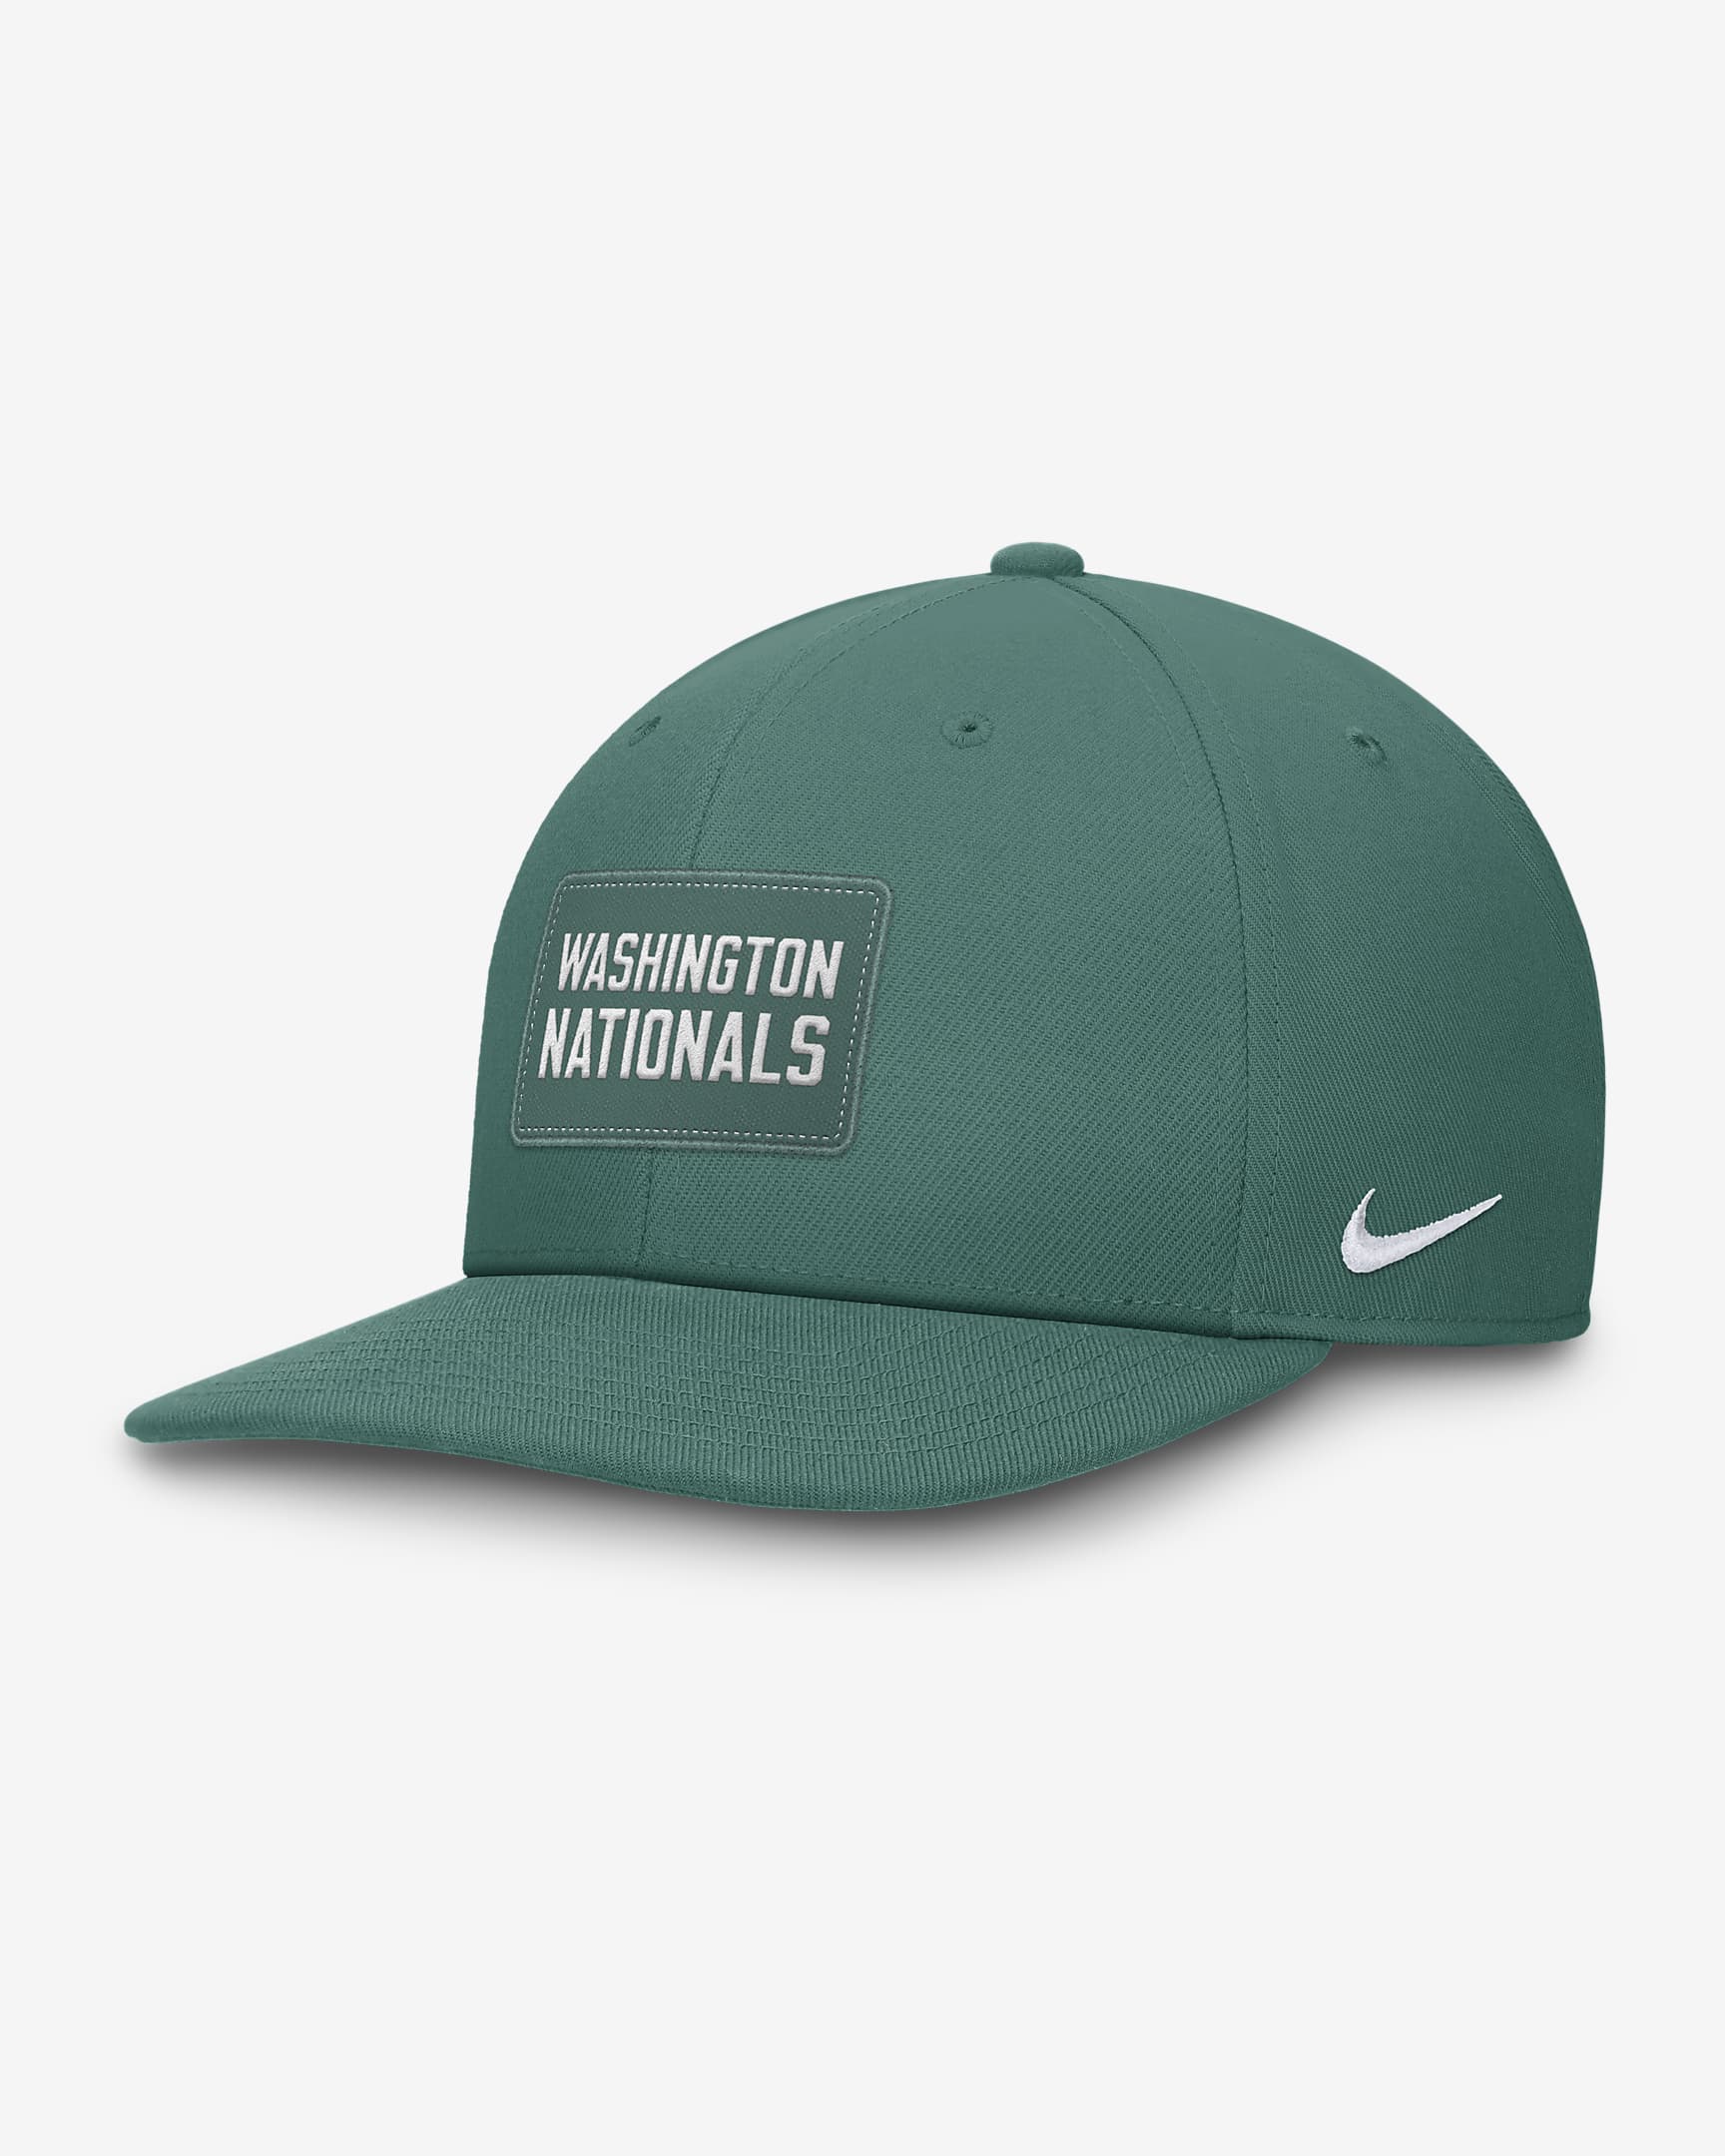 Washington Nationals Bicoastal Pro Men's Nike Dri-FIT MLB Adjustable Hat - Bicoastal